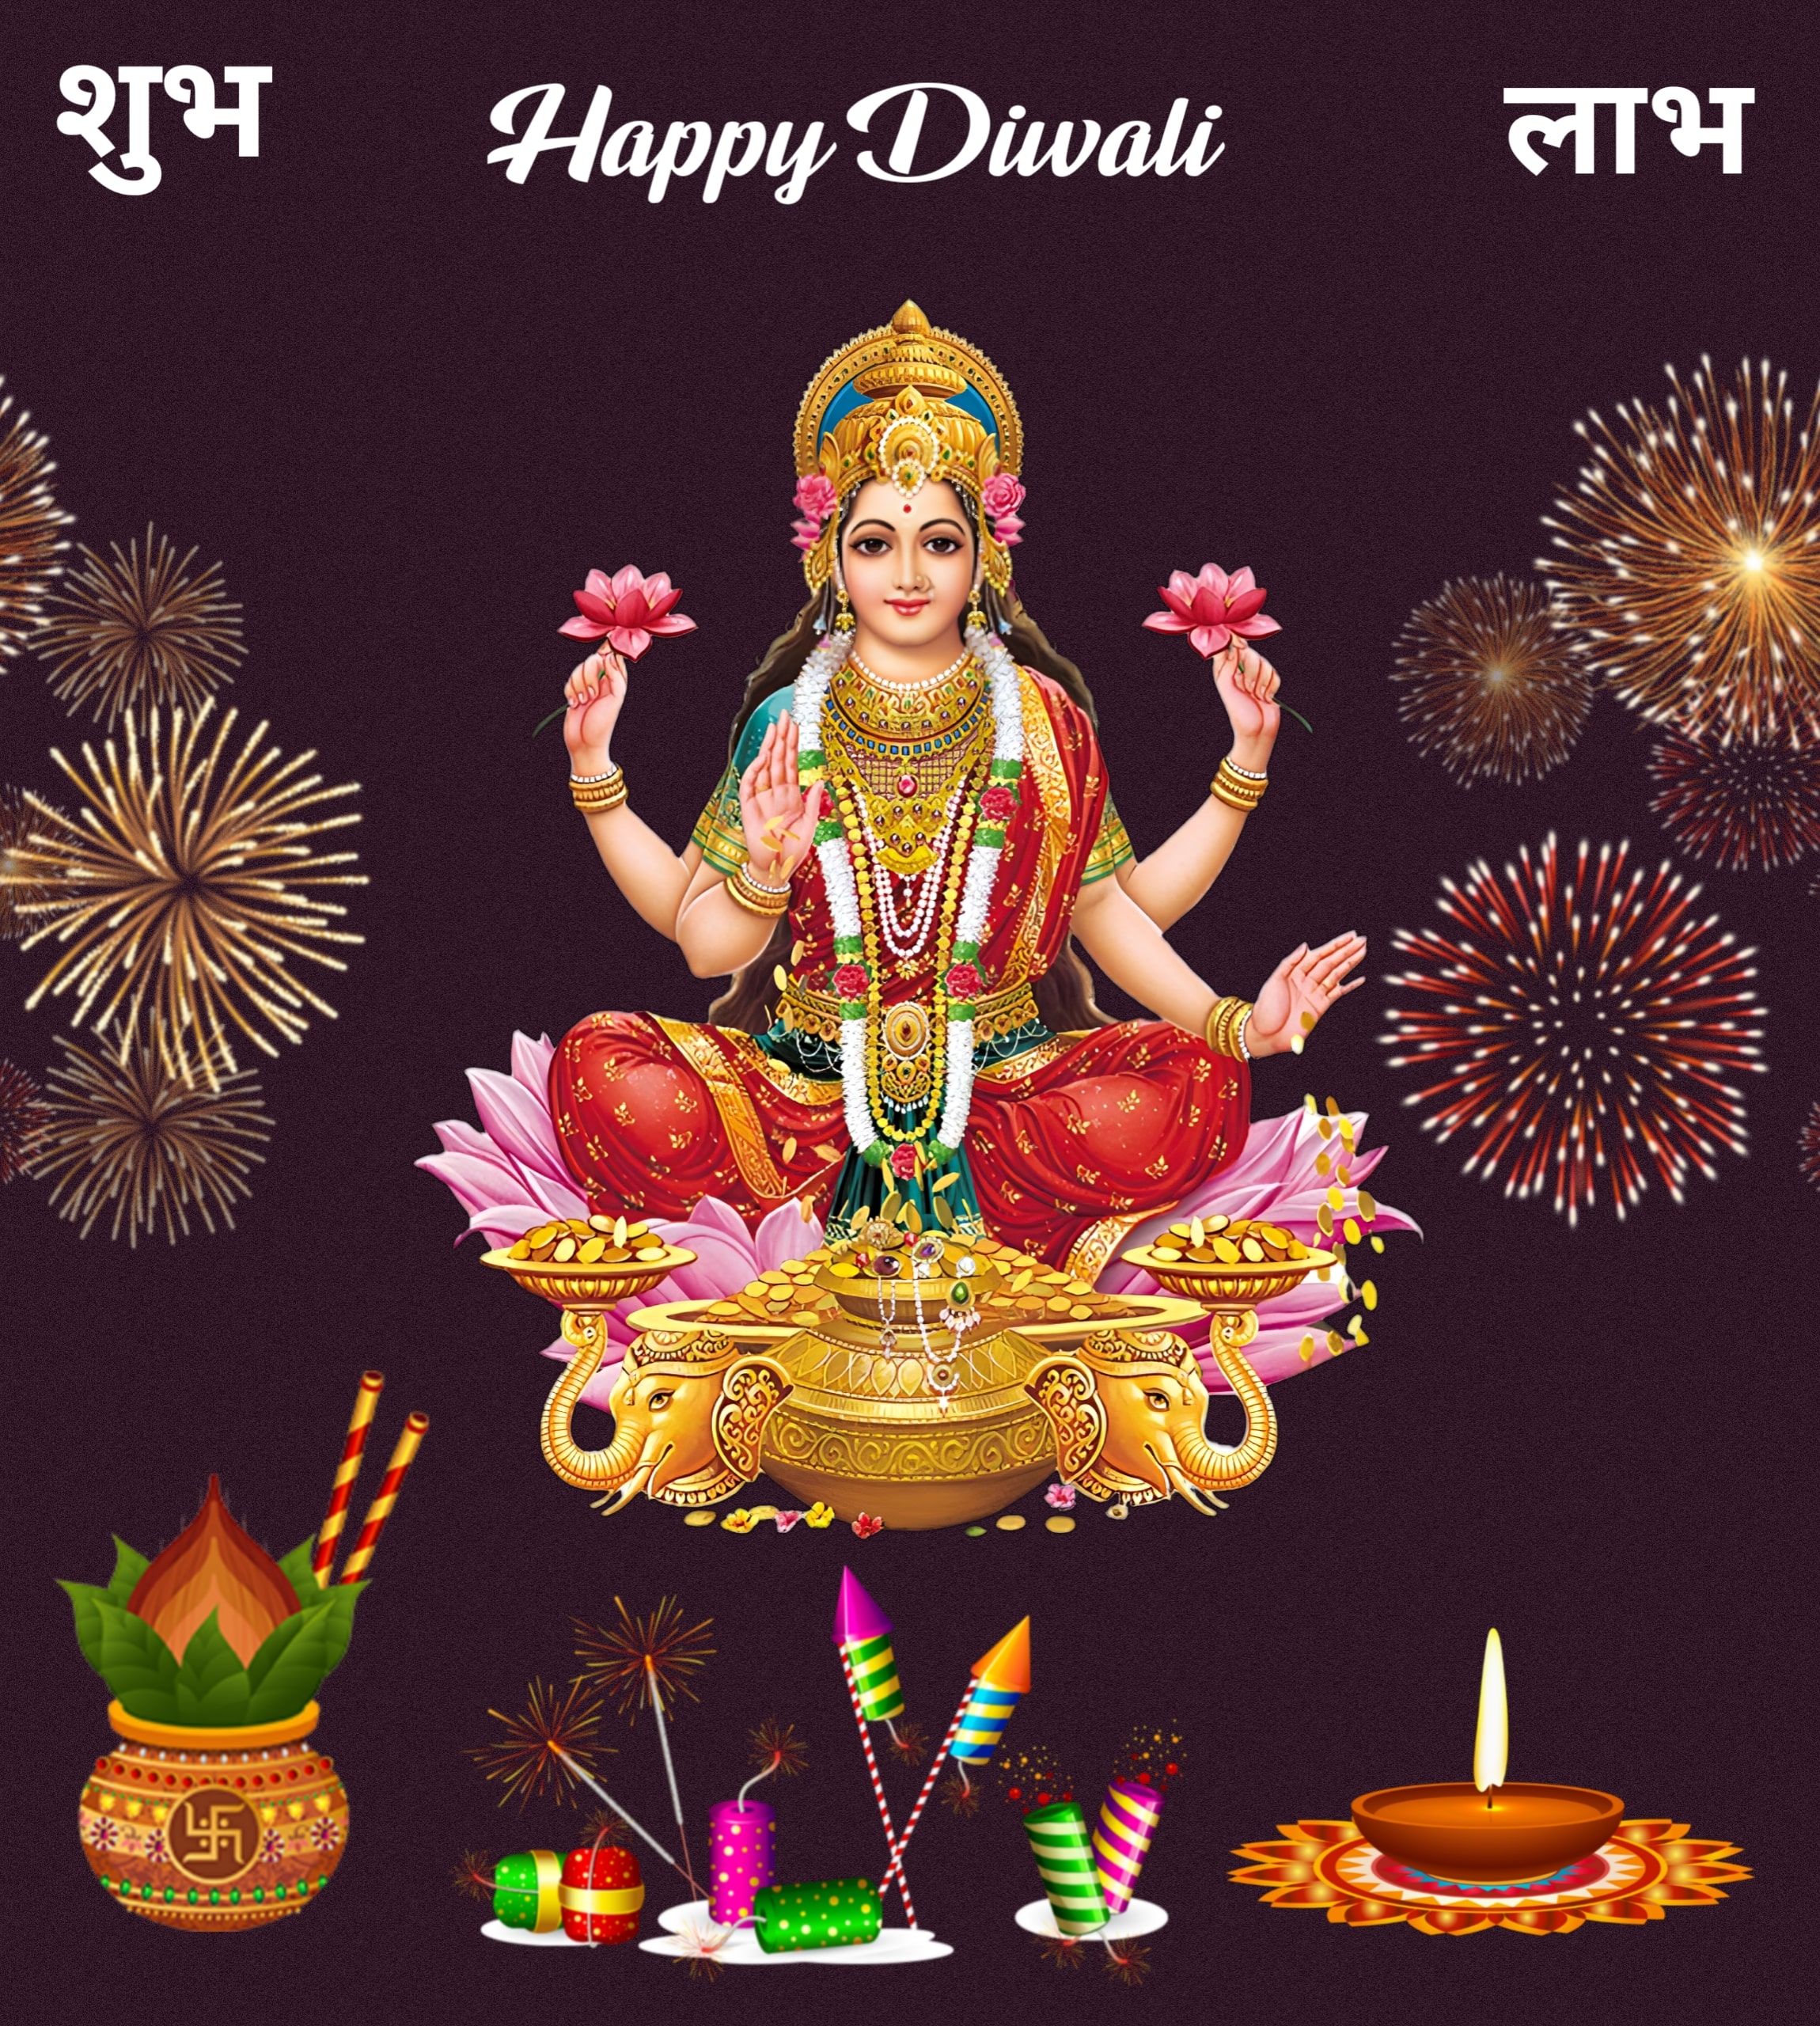 Happy Diwali Wishes Image With Ma Laxmi 